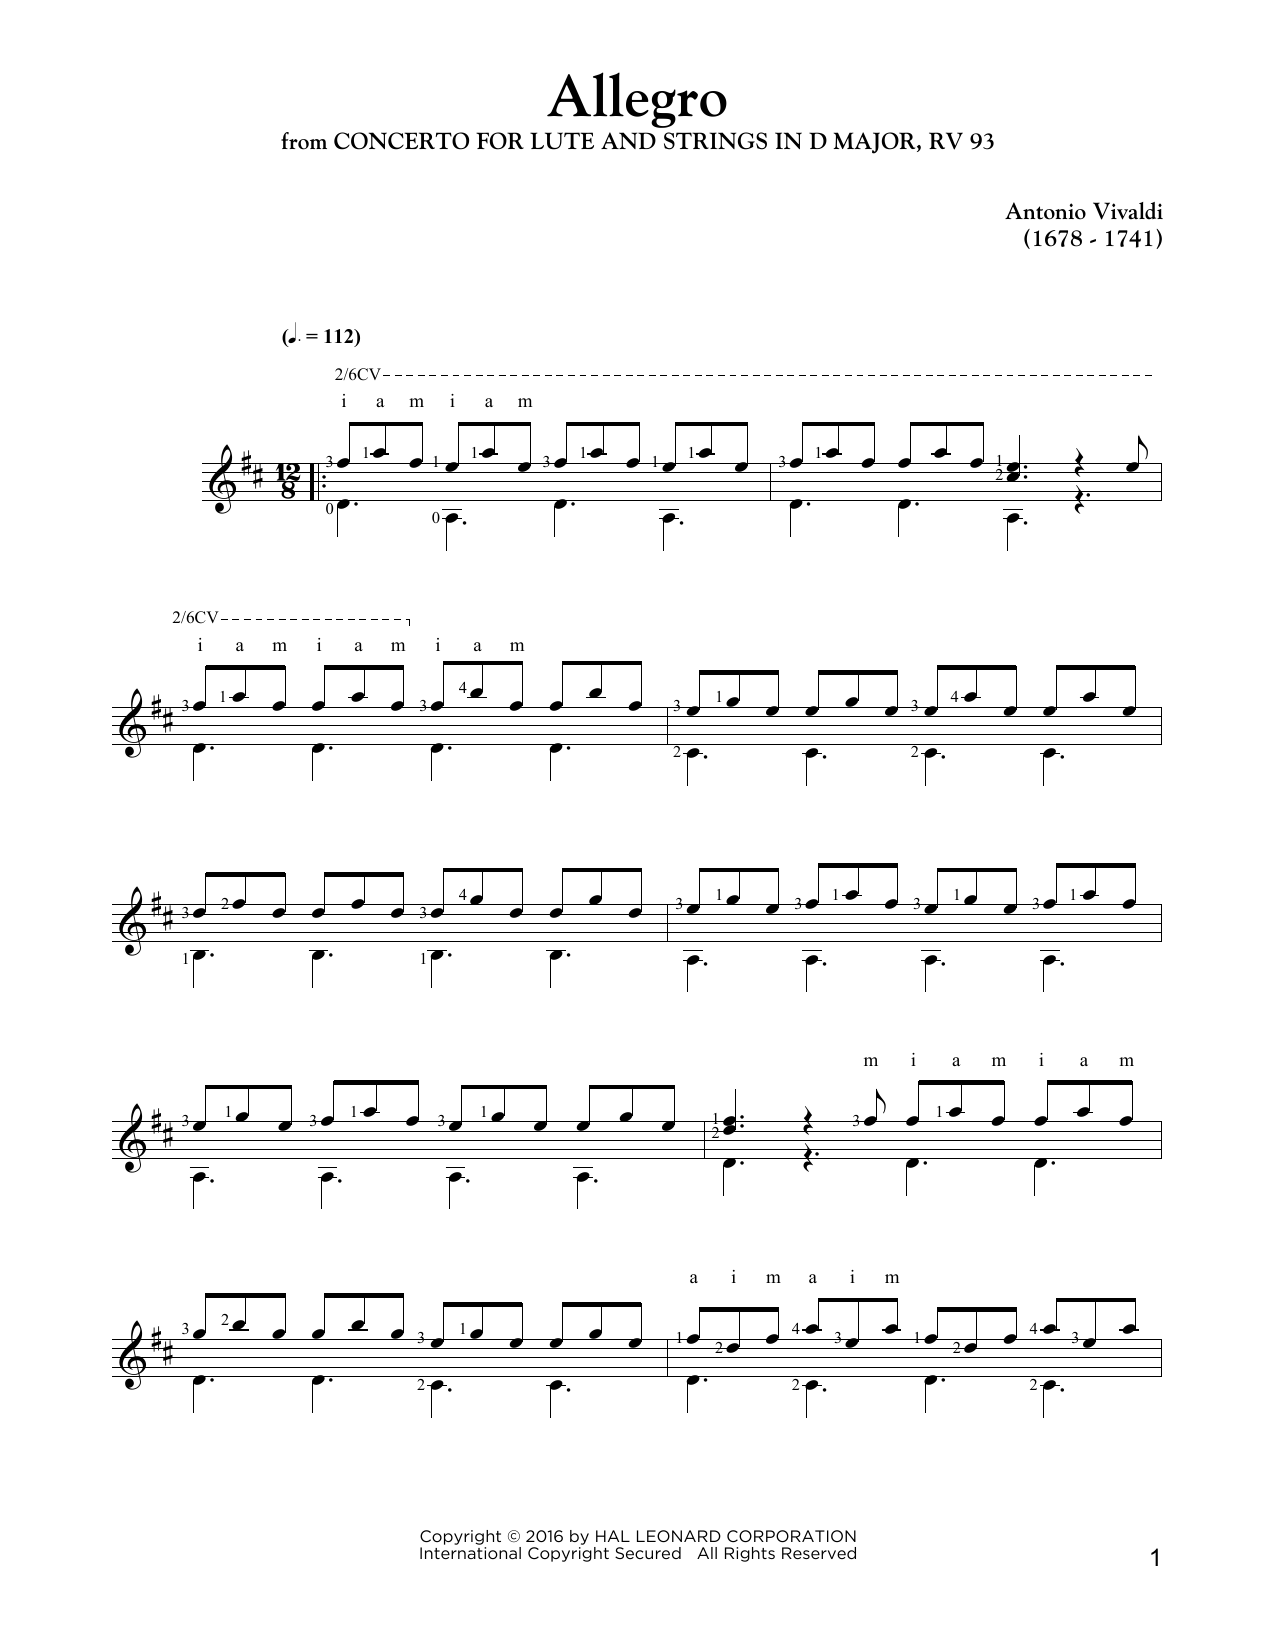 Antonio Vivaldi Allegro Sheet Music Notes & Chords for Instrumental Solo - Download or Print PDF